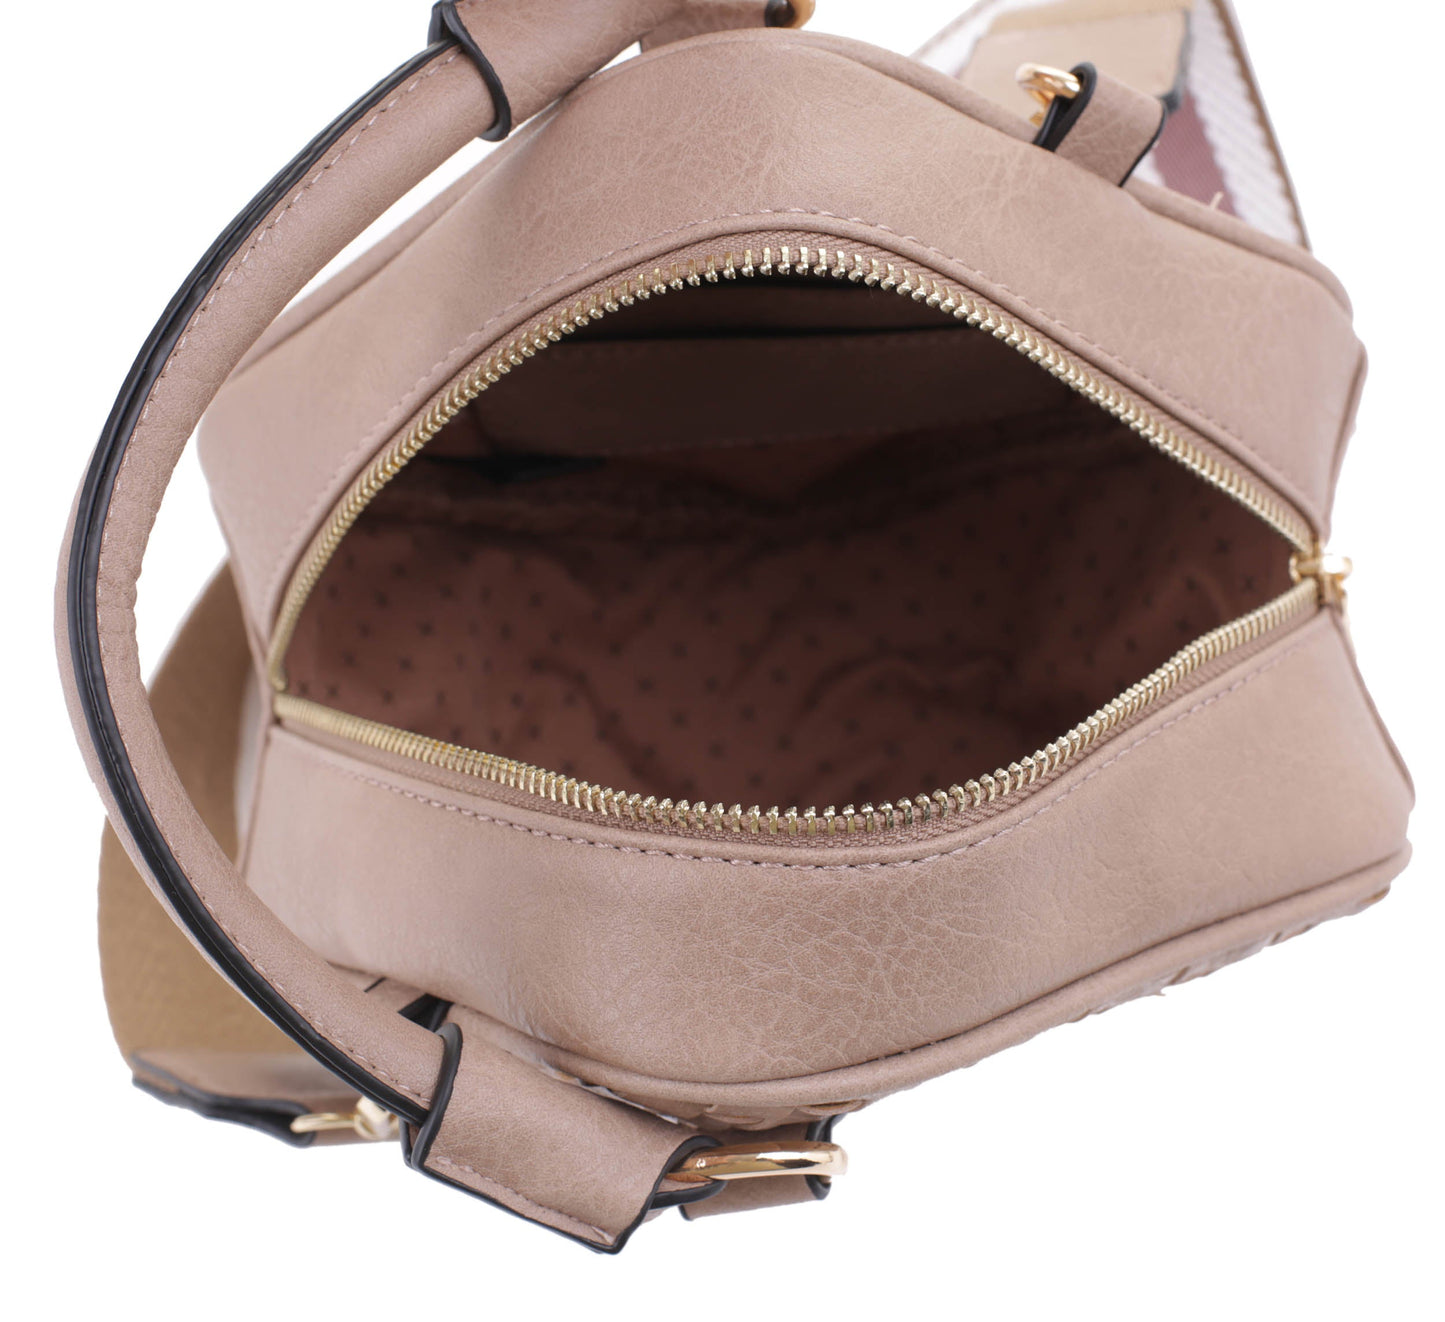 Basket Weave Woven Diamond Crossbody Clutch Handbag